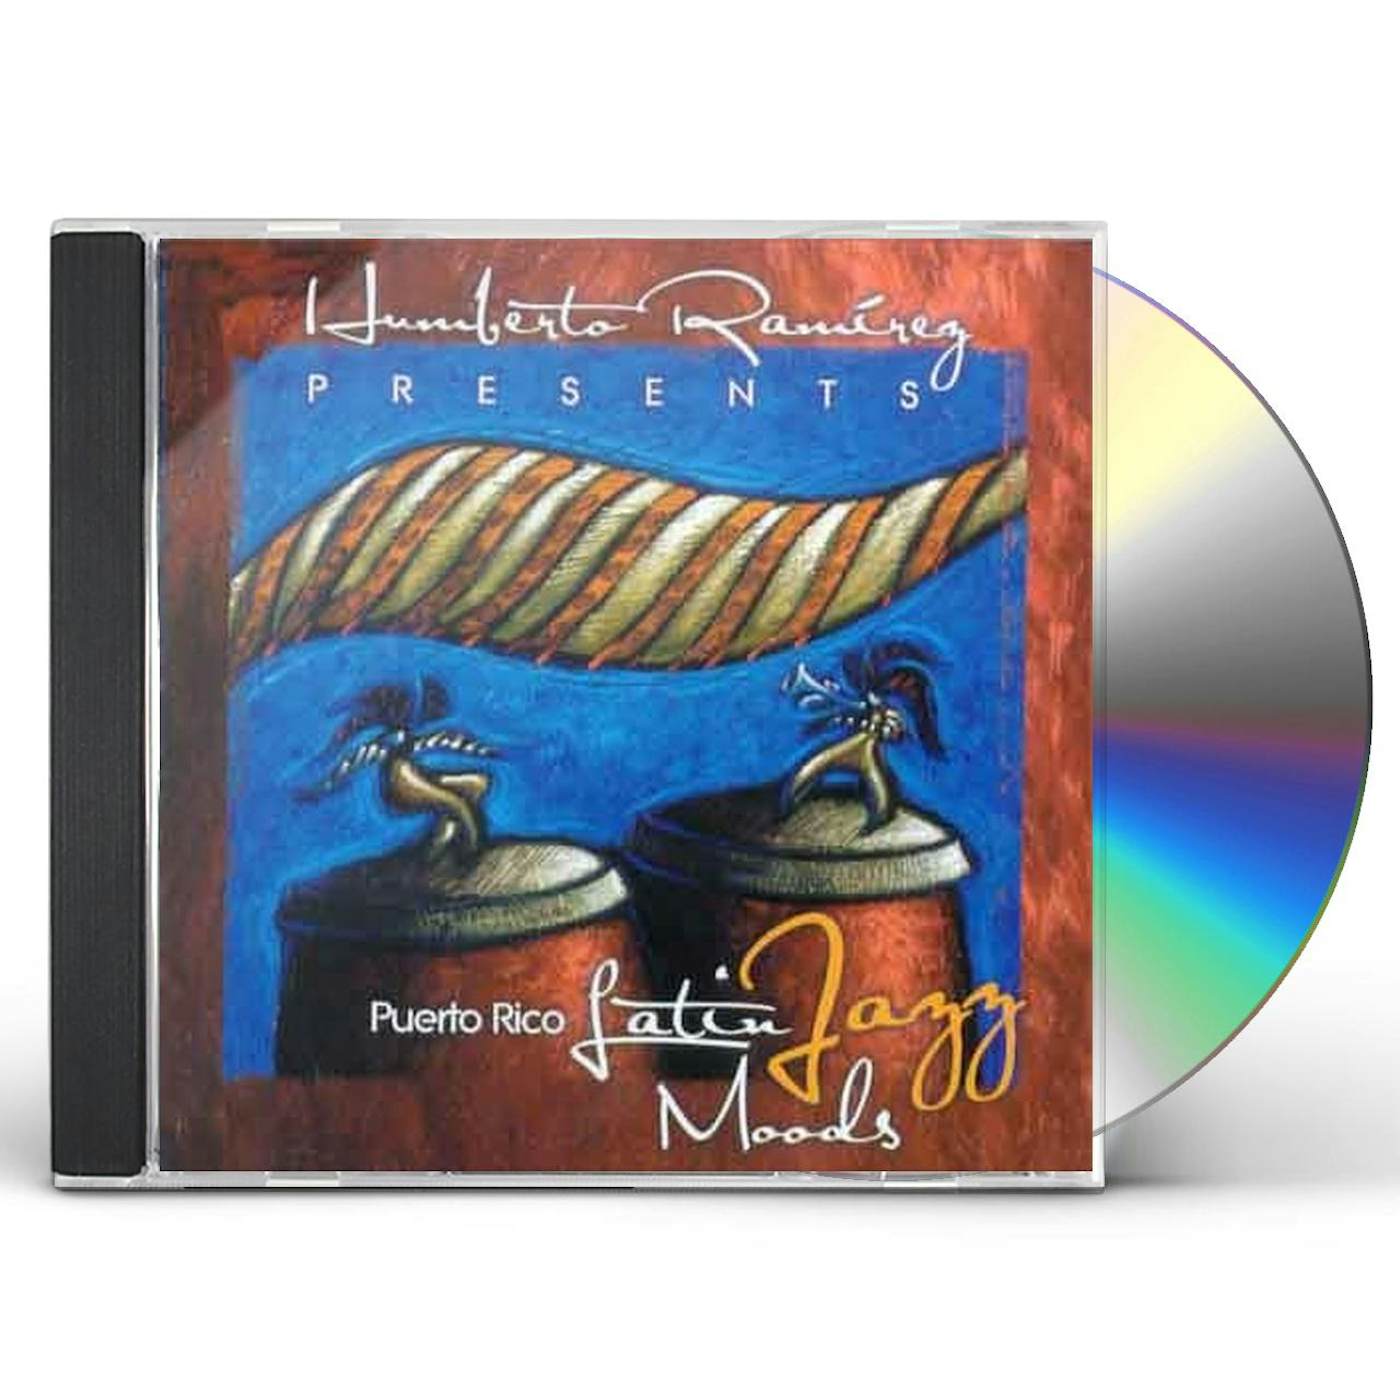 Humberto Ramirez PUERTO RICO LATIN JAZZ MOODS CD